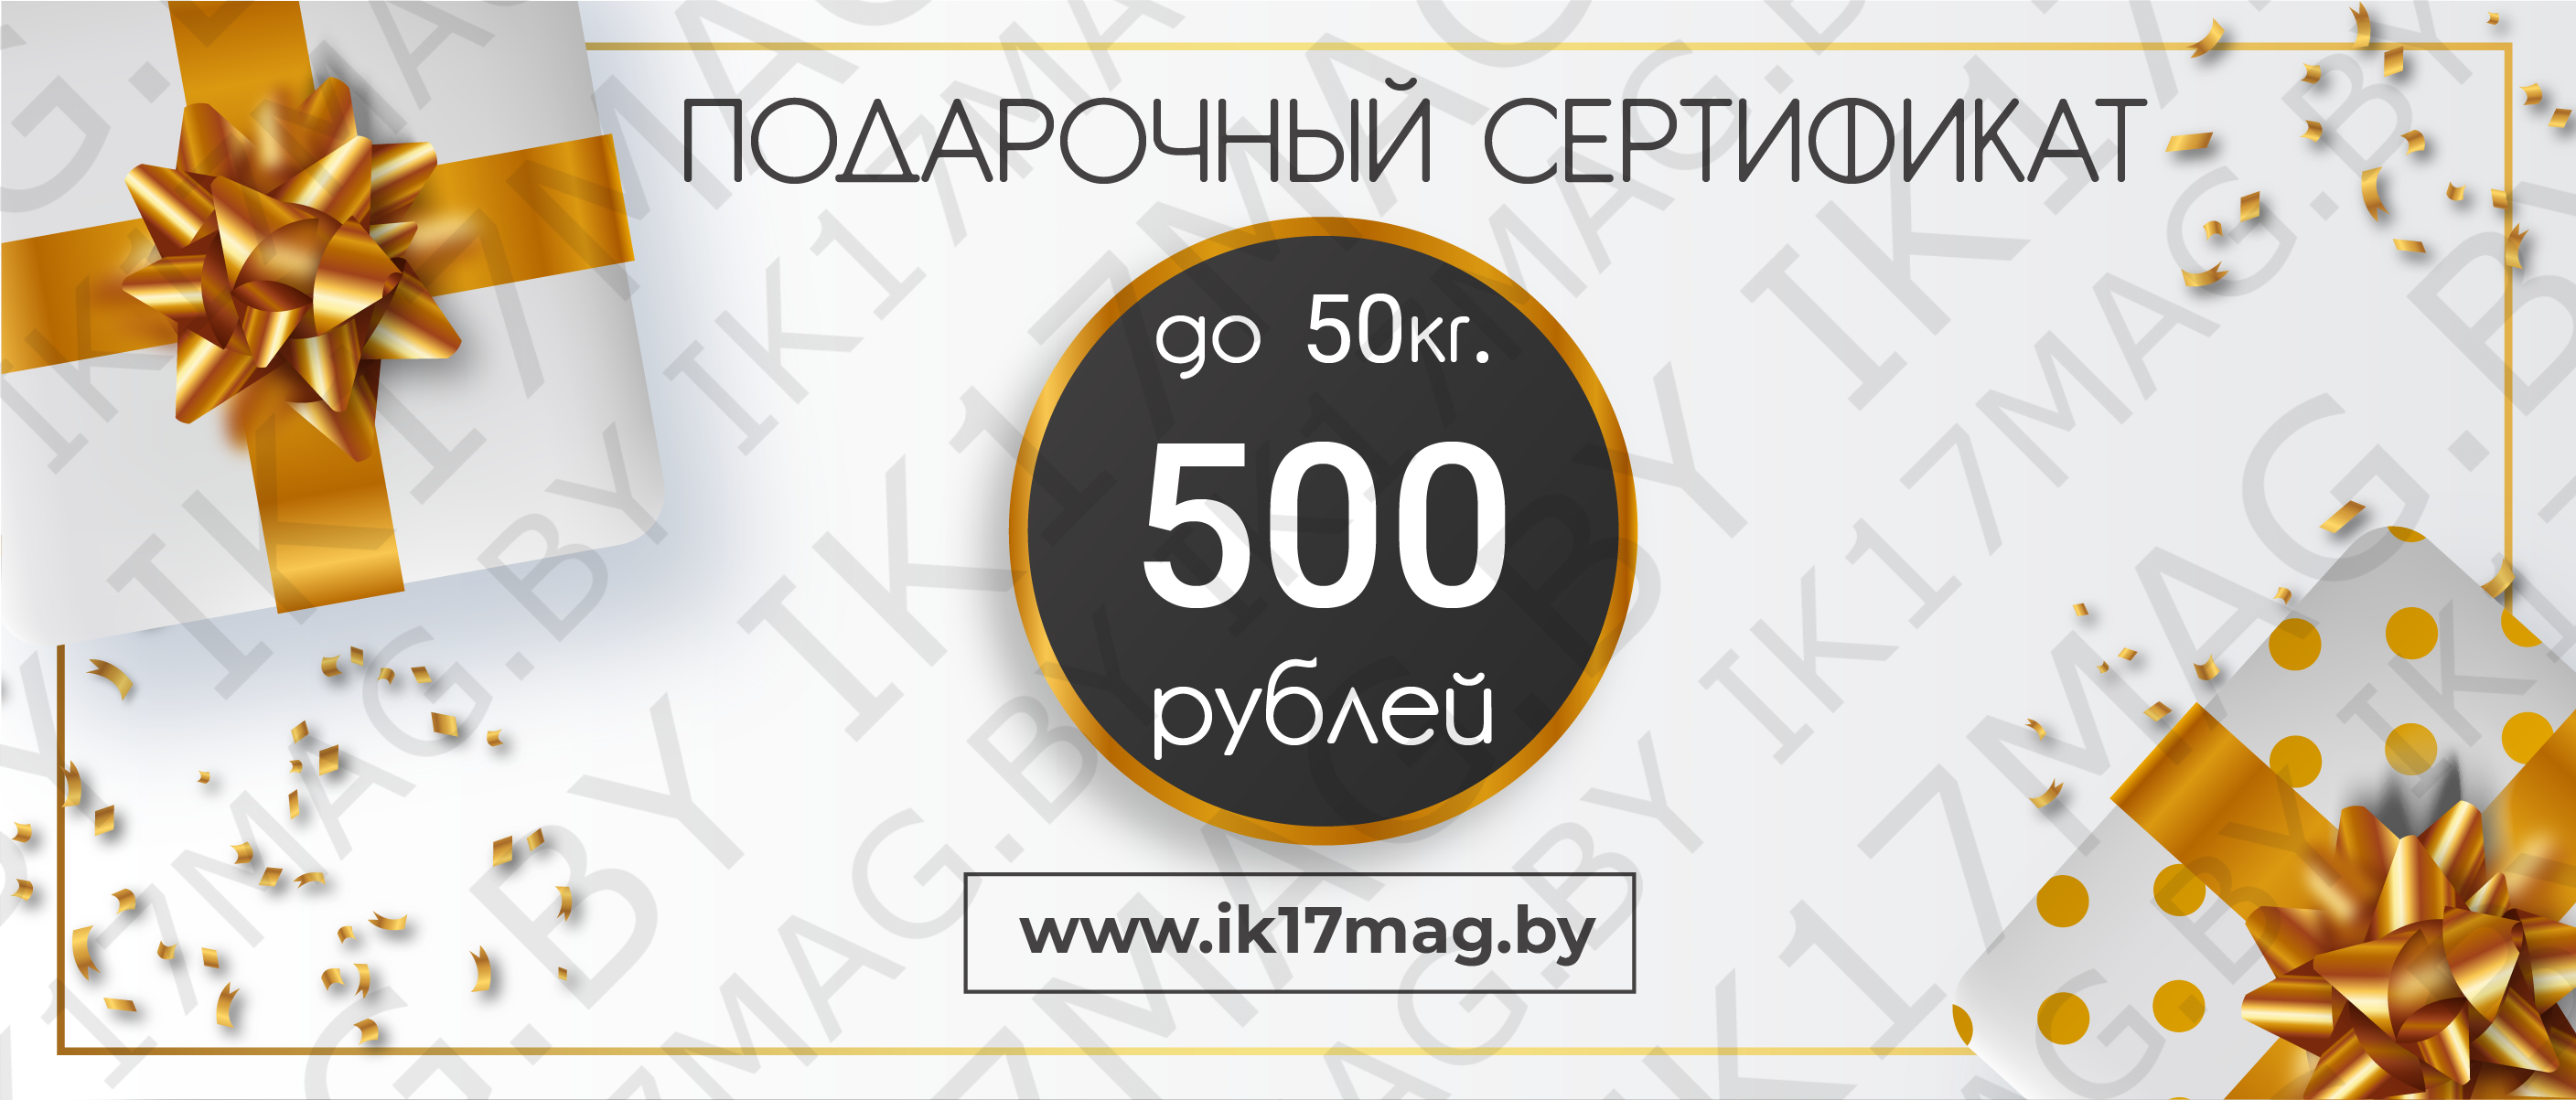 Сертификат на 500 рублей до 50 кг.